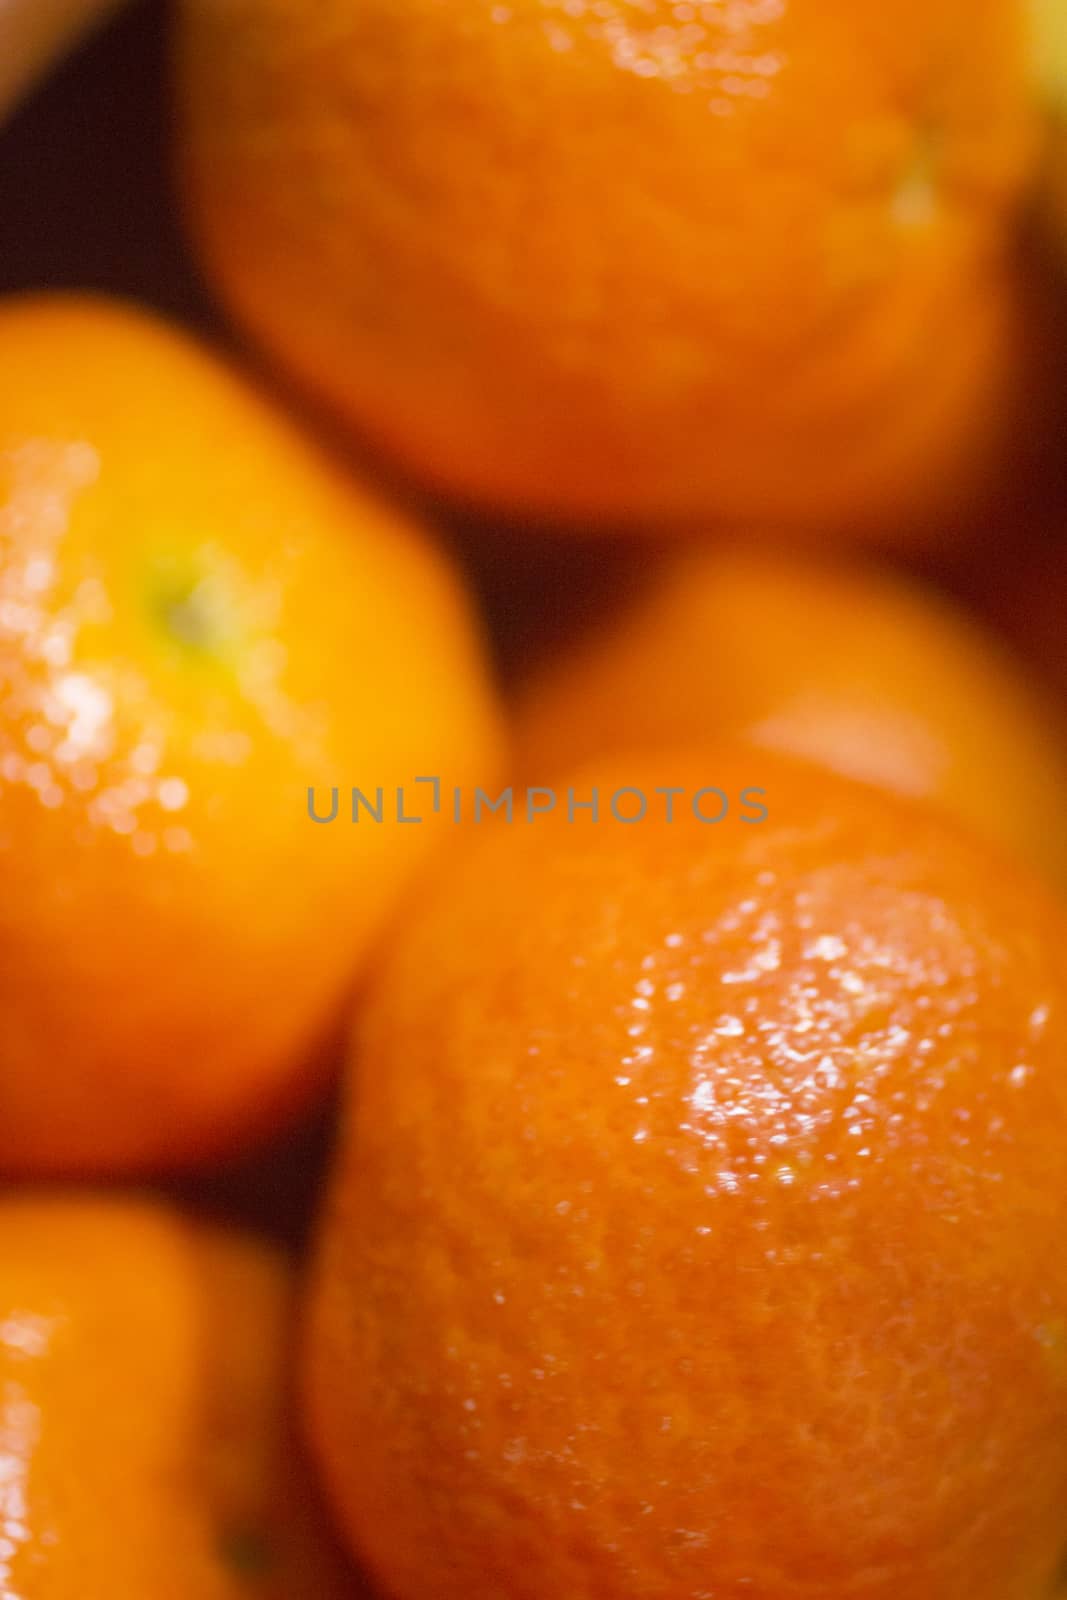 Fresh mandarins tangerine clementines satsuma oranges close-up photo.